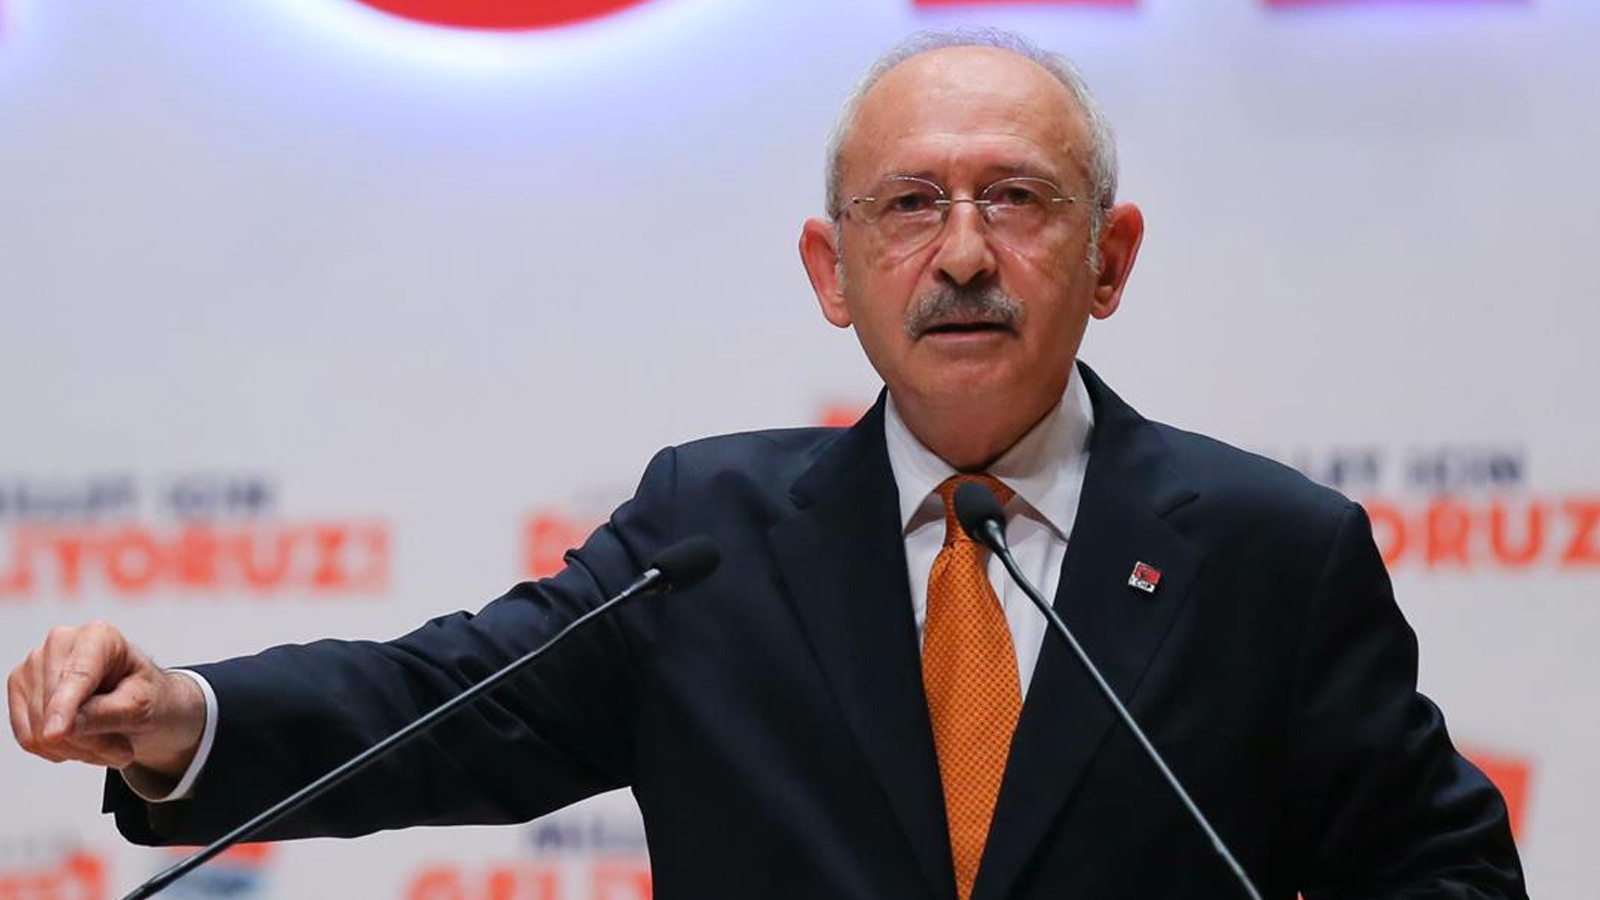 Opposition leader Kılıçdaroğlu: "Nobody’s life, property safe in Turkey"